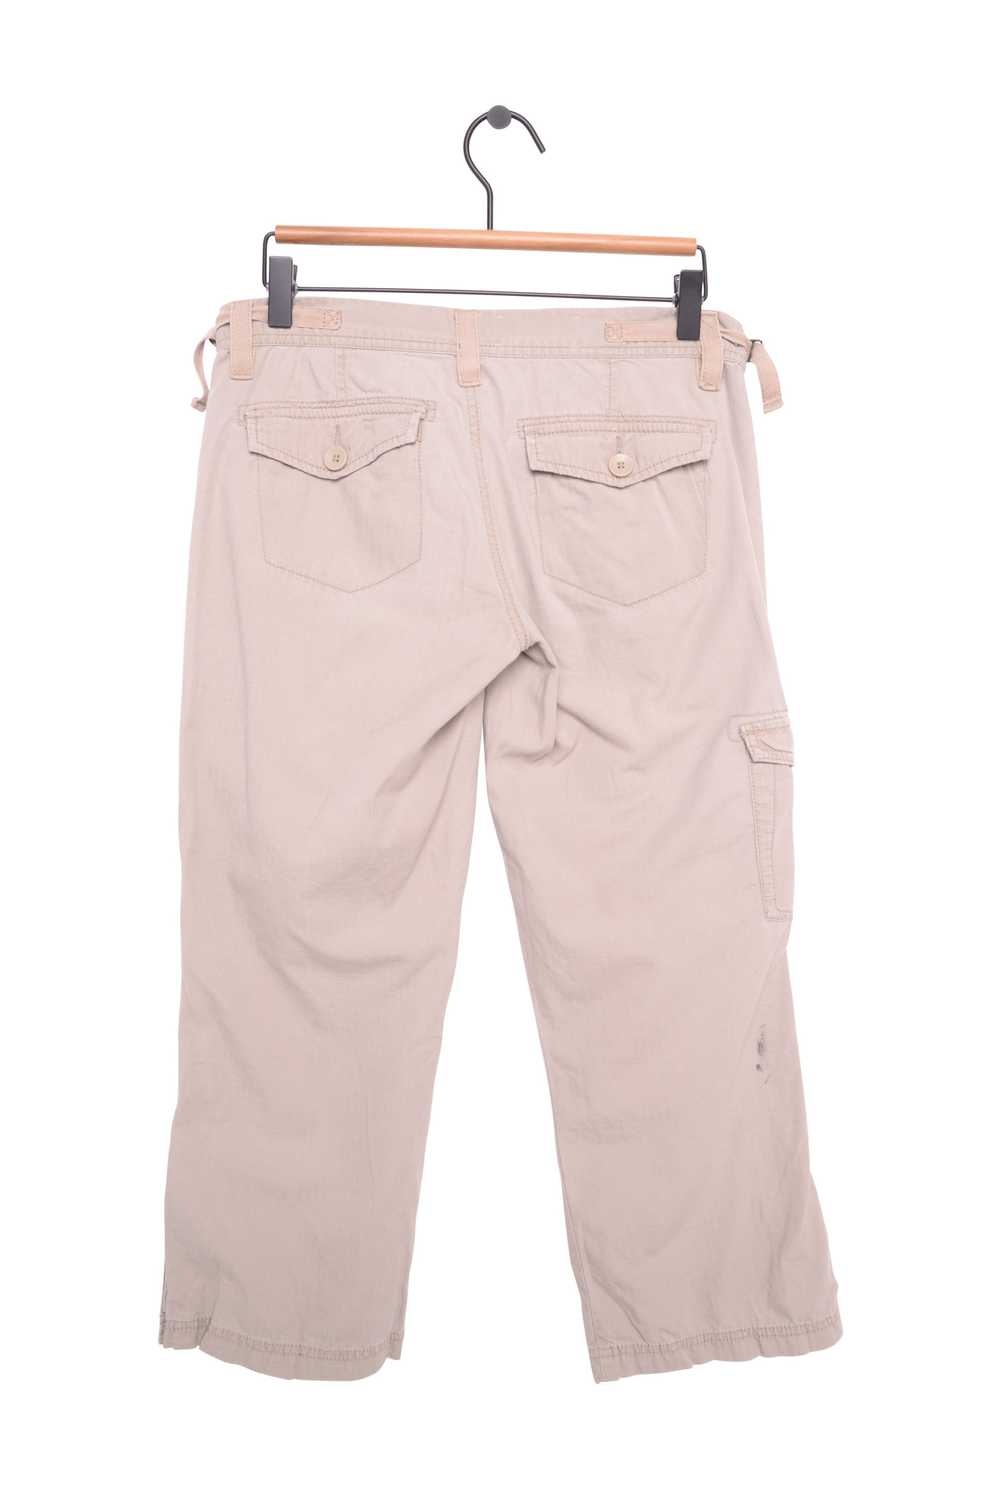 Y2K Calvin Klein Cargo Pants - image 2